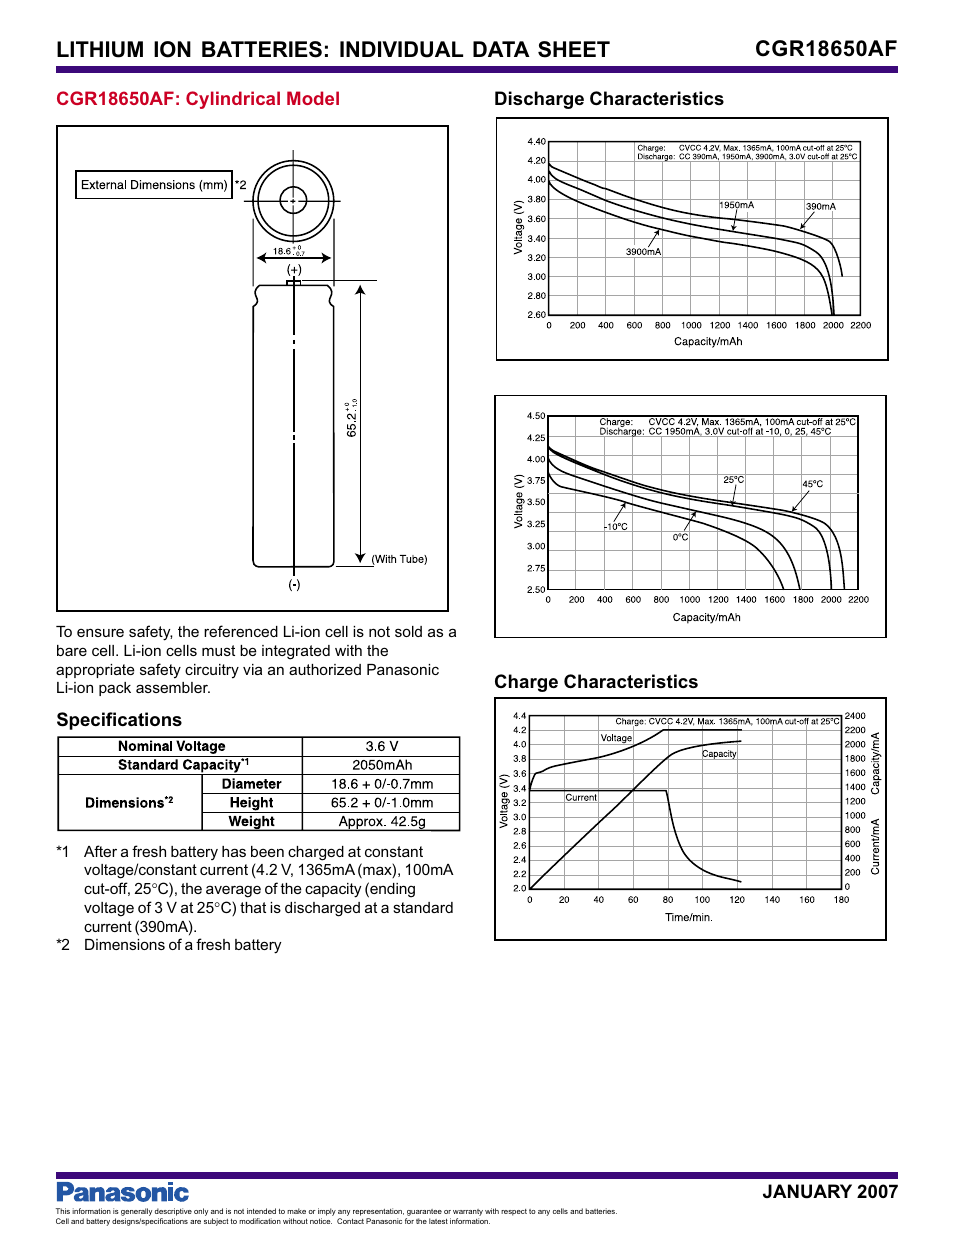 Panasonic CGR18650AF User Manual | 1 page